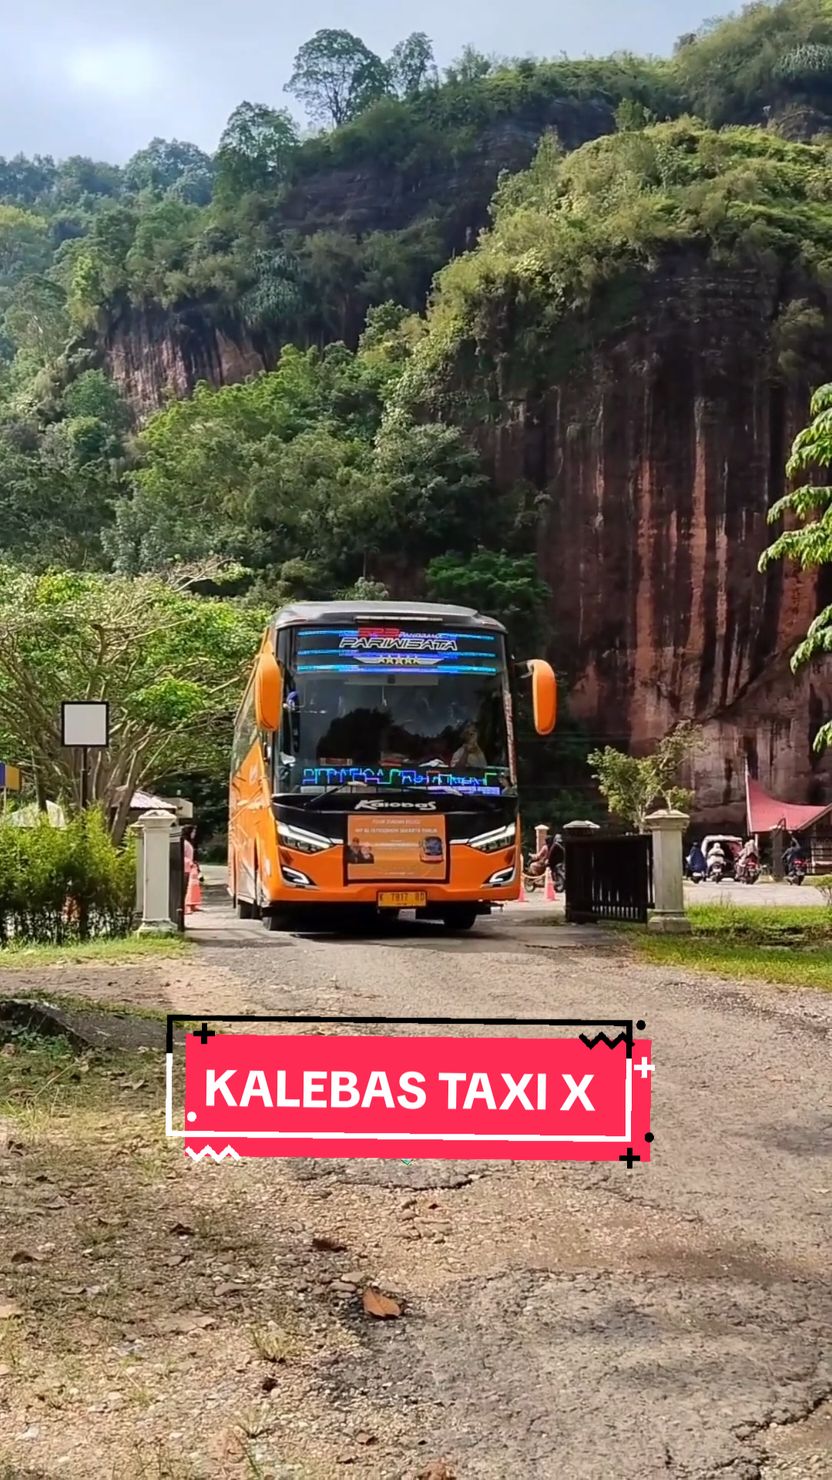 Momen Bus artis jawa main ke lembah harau kala itu #kalebasbus #kalebastaxix #lembahharau #fyp @tampalo013 